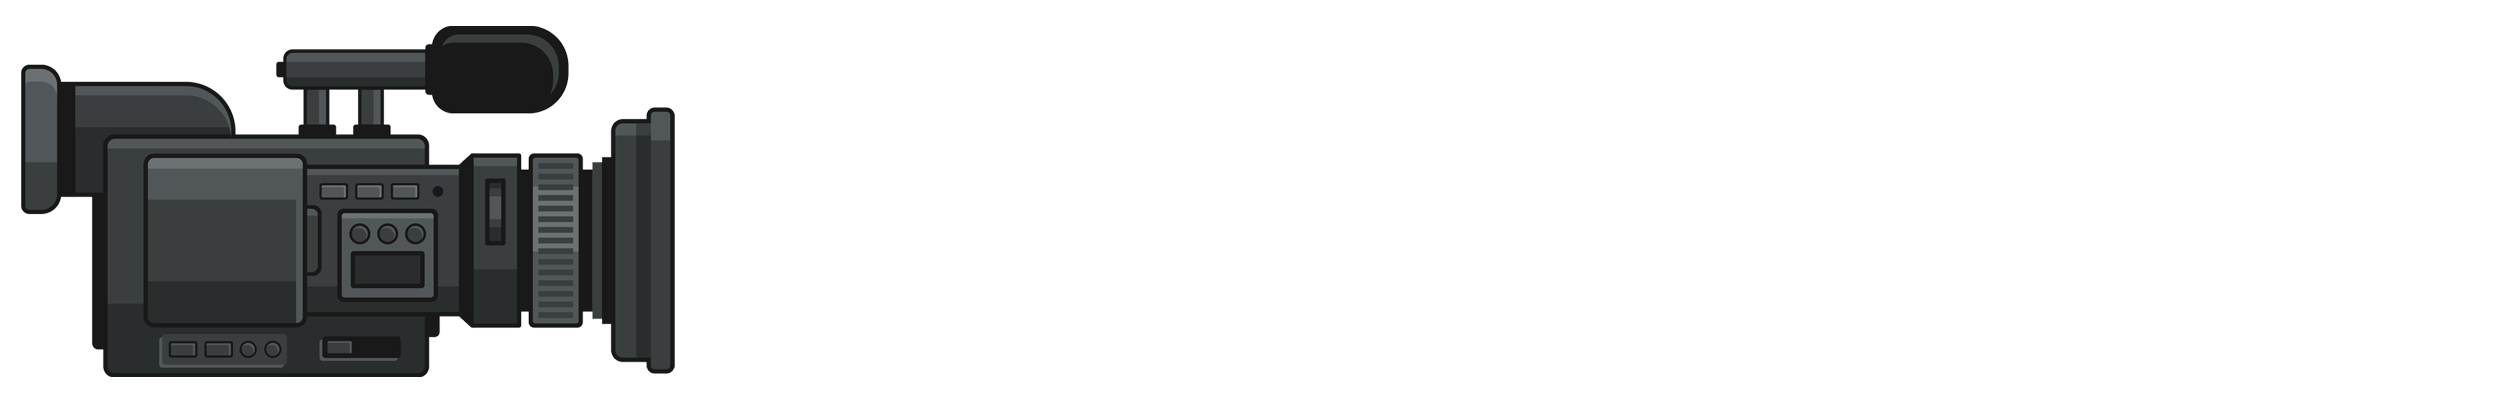 Fogarty TV & Media Productions logo